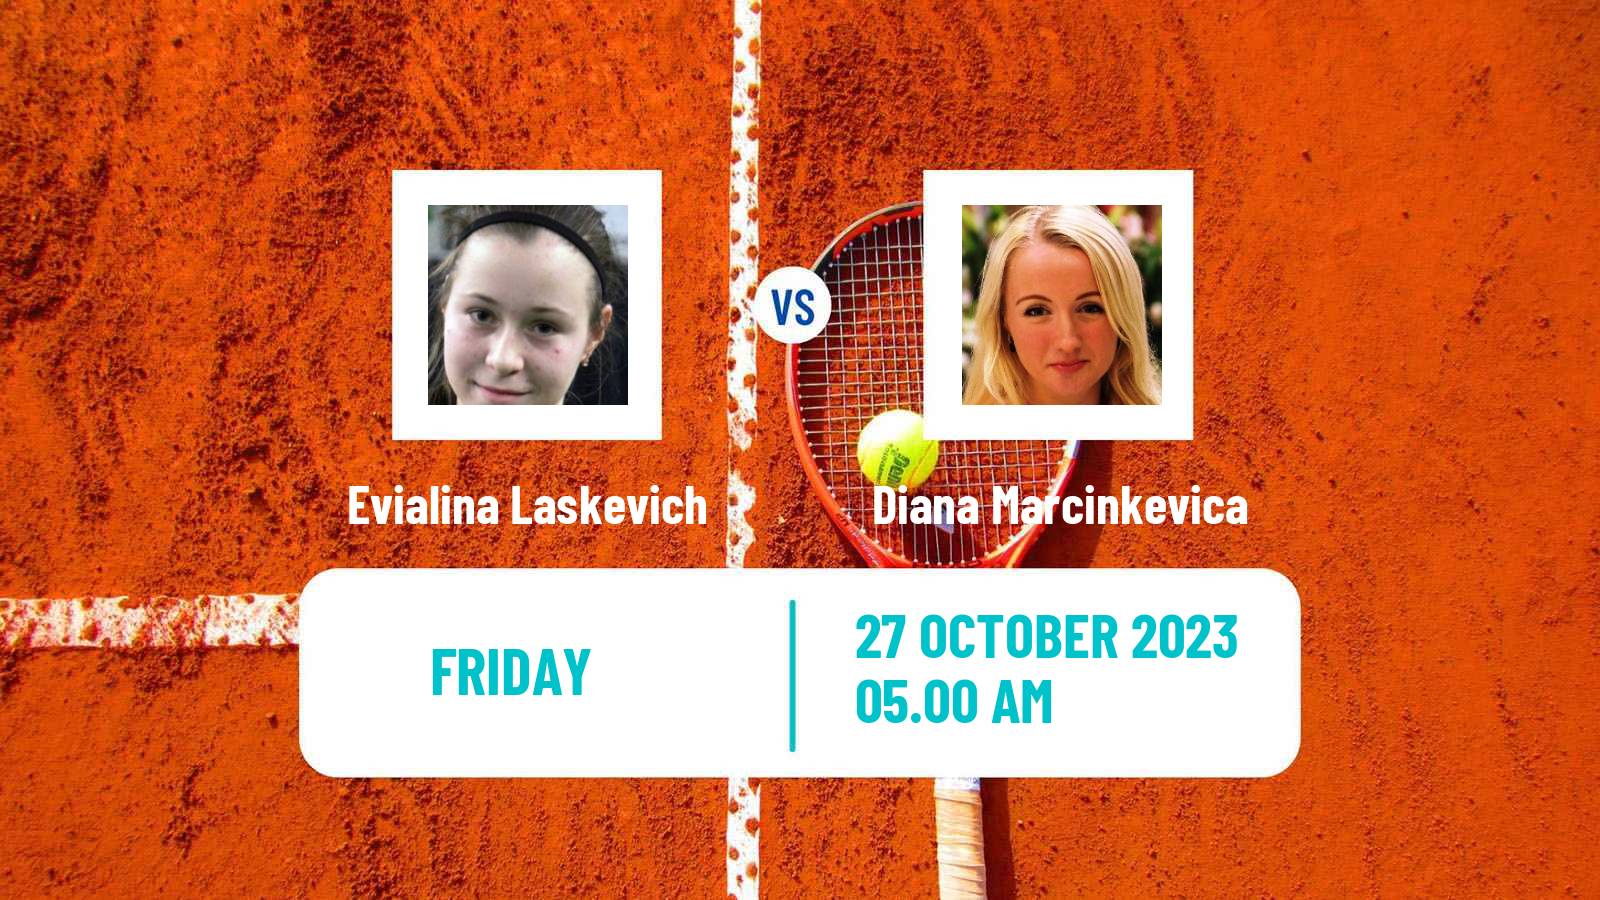 Tennis ITF W25 Loule Women Evialina Laskevich - Diana Marcinkevica